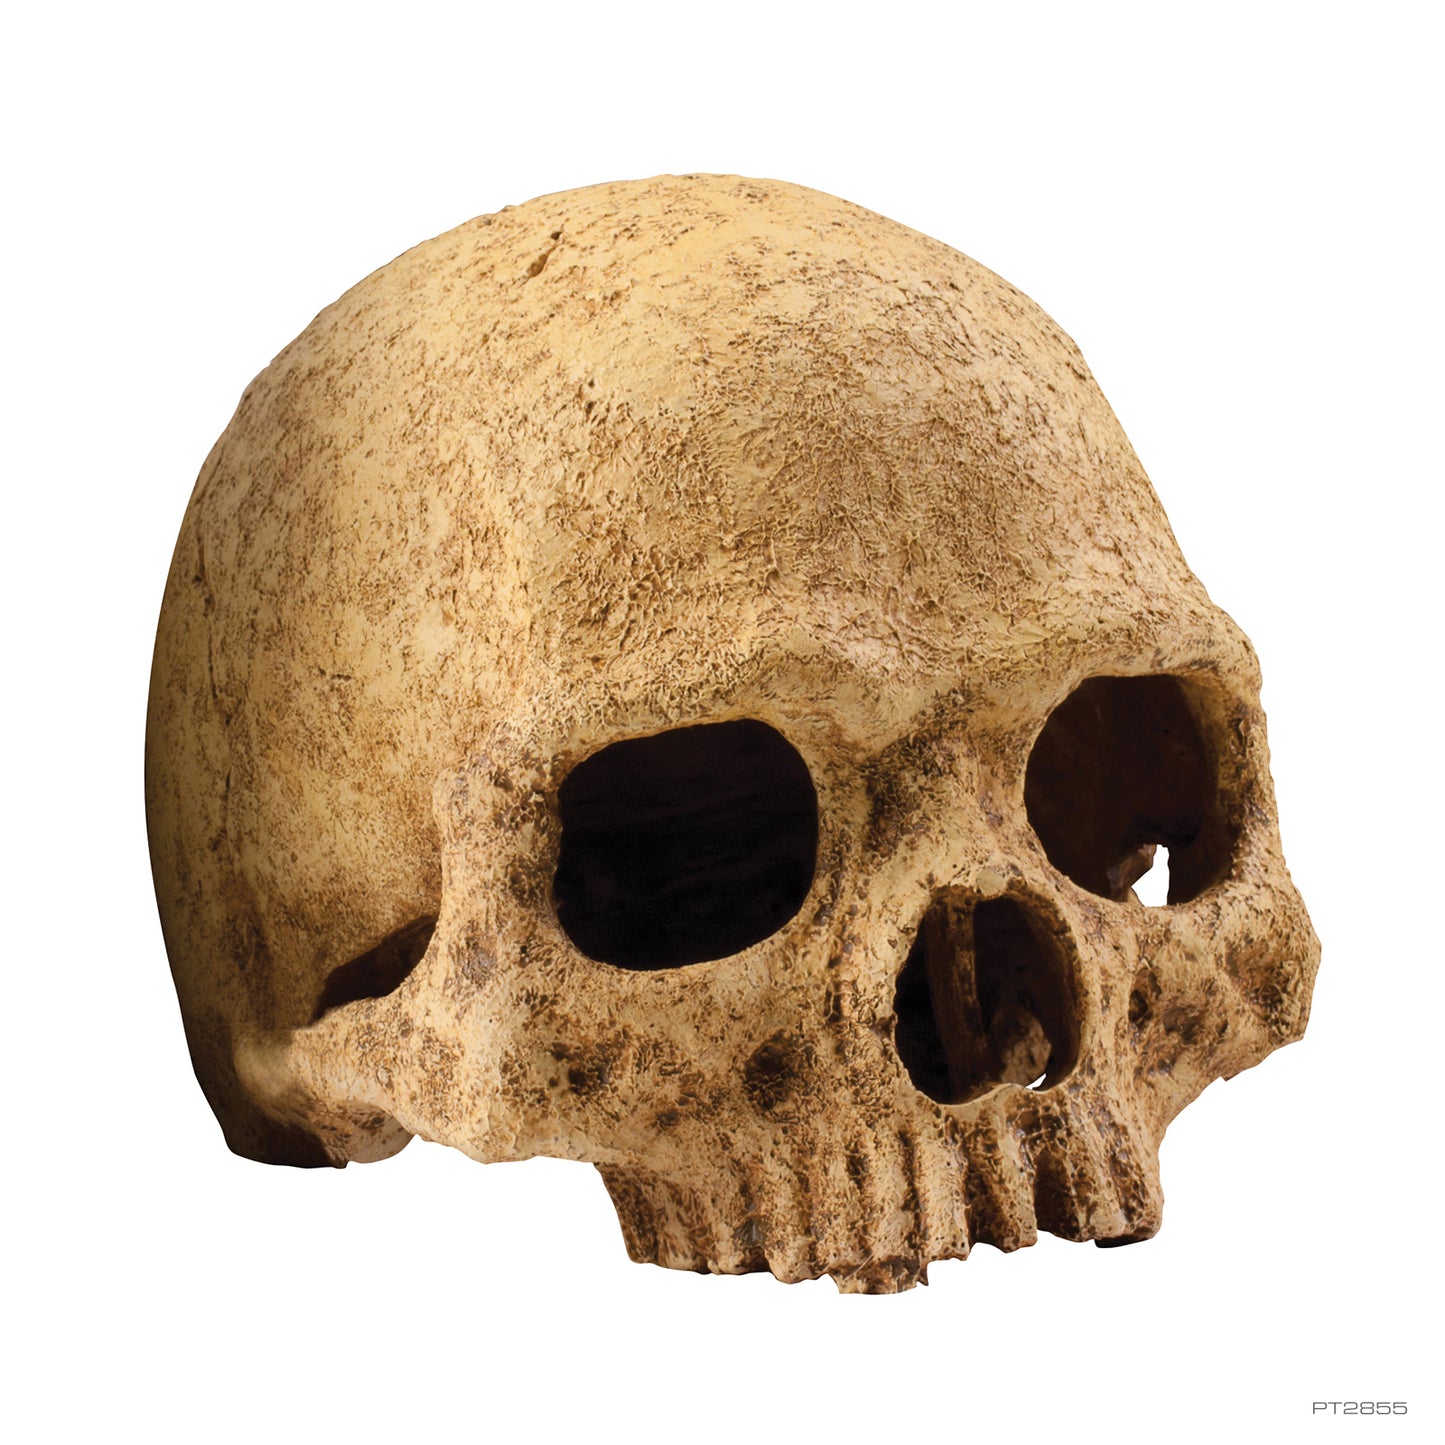 Exo Terra-Reptile Hiding Cave - Primate Skull